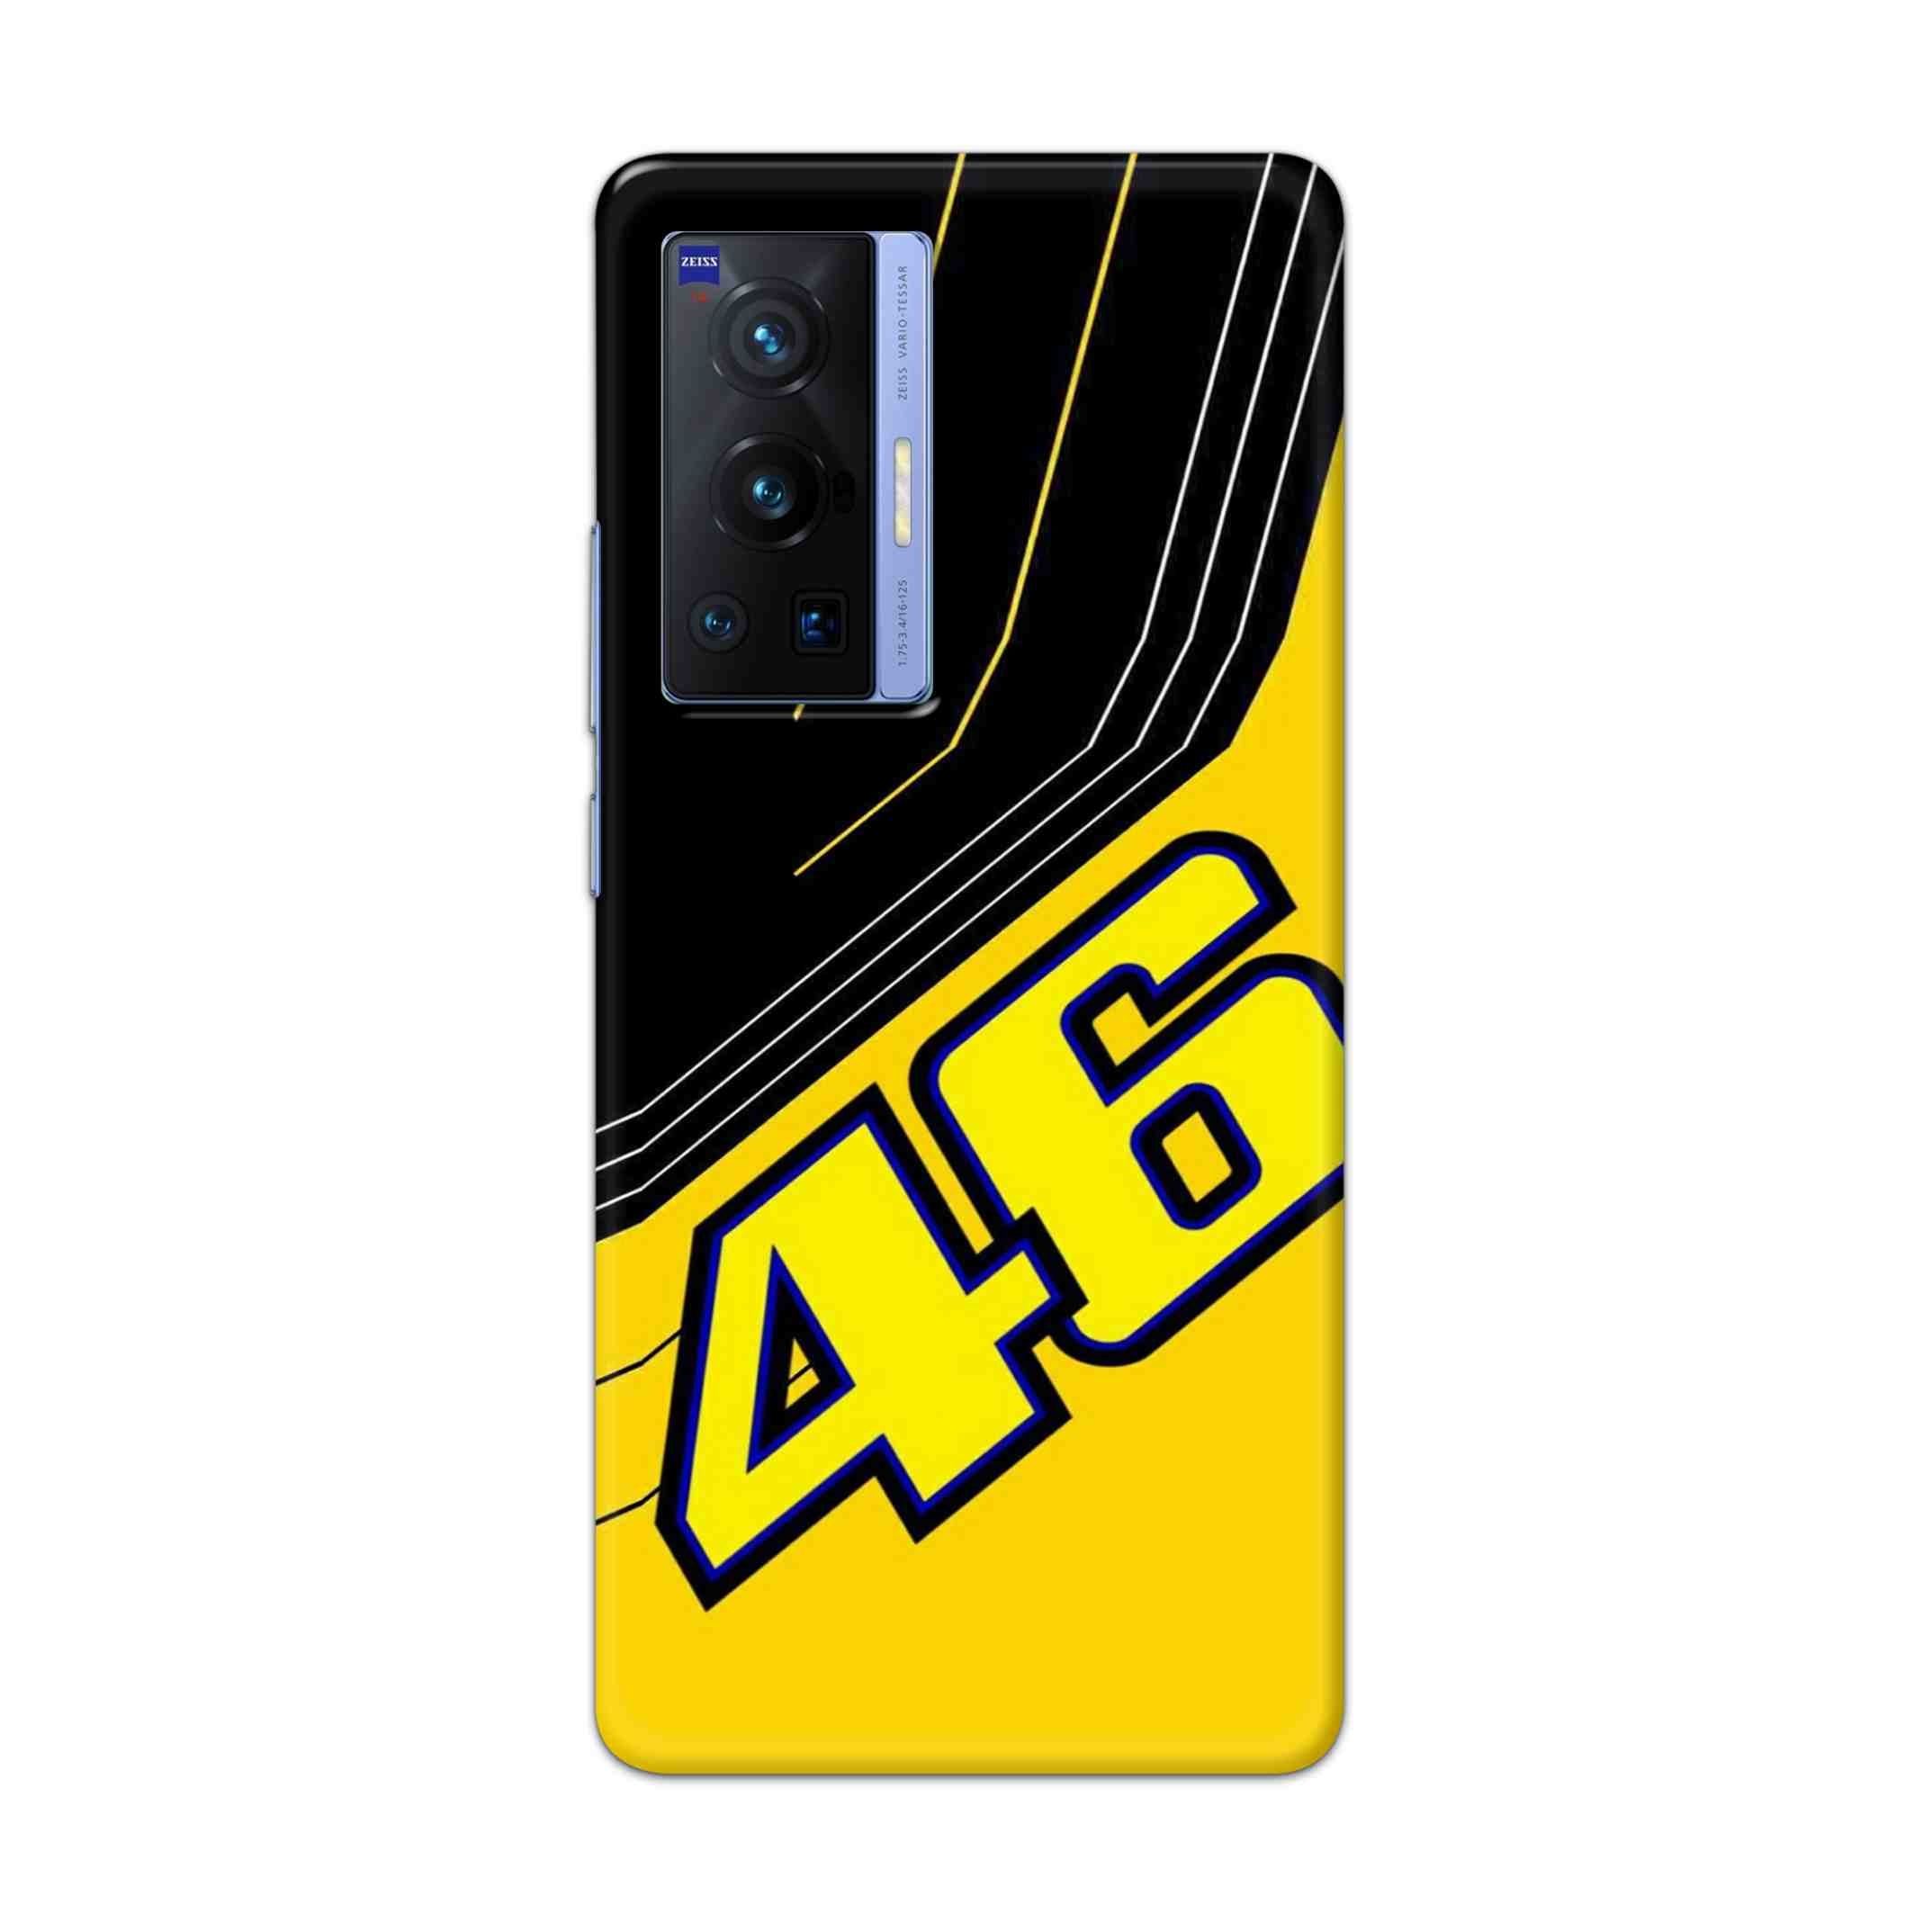 Buy 46 Hard Back Mobile Phone Case Cover For Vivo X70 Pro Online